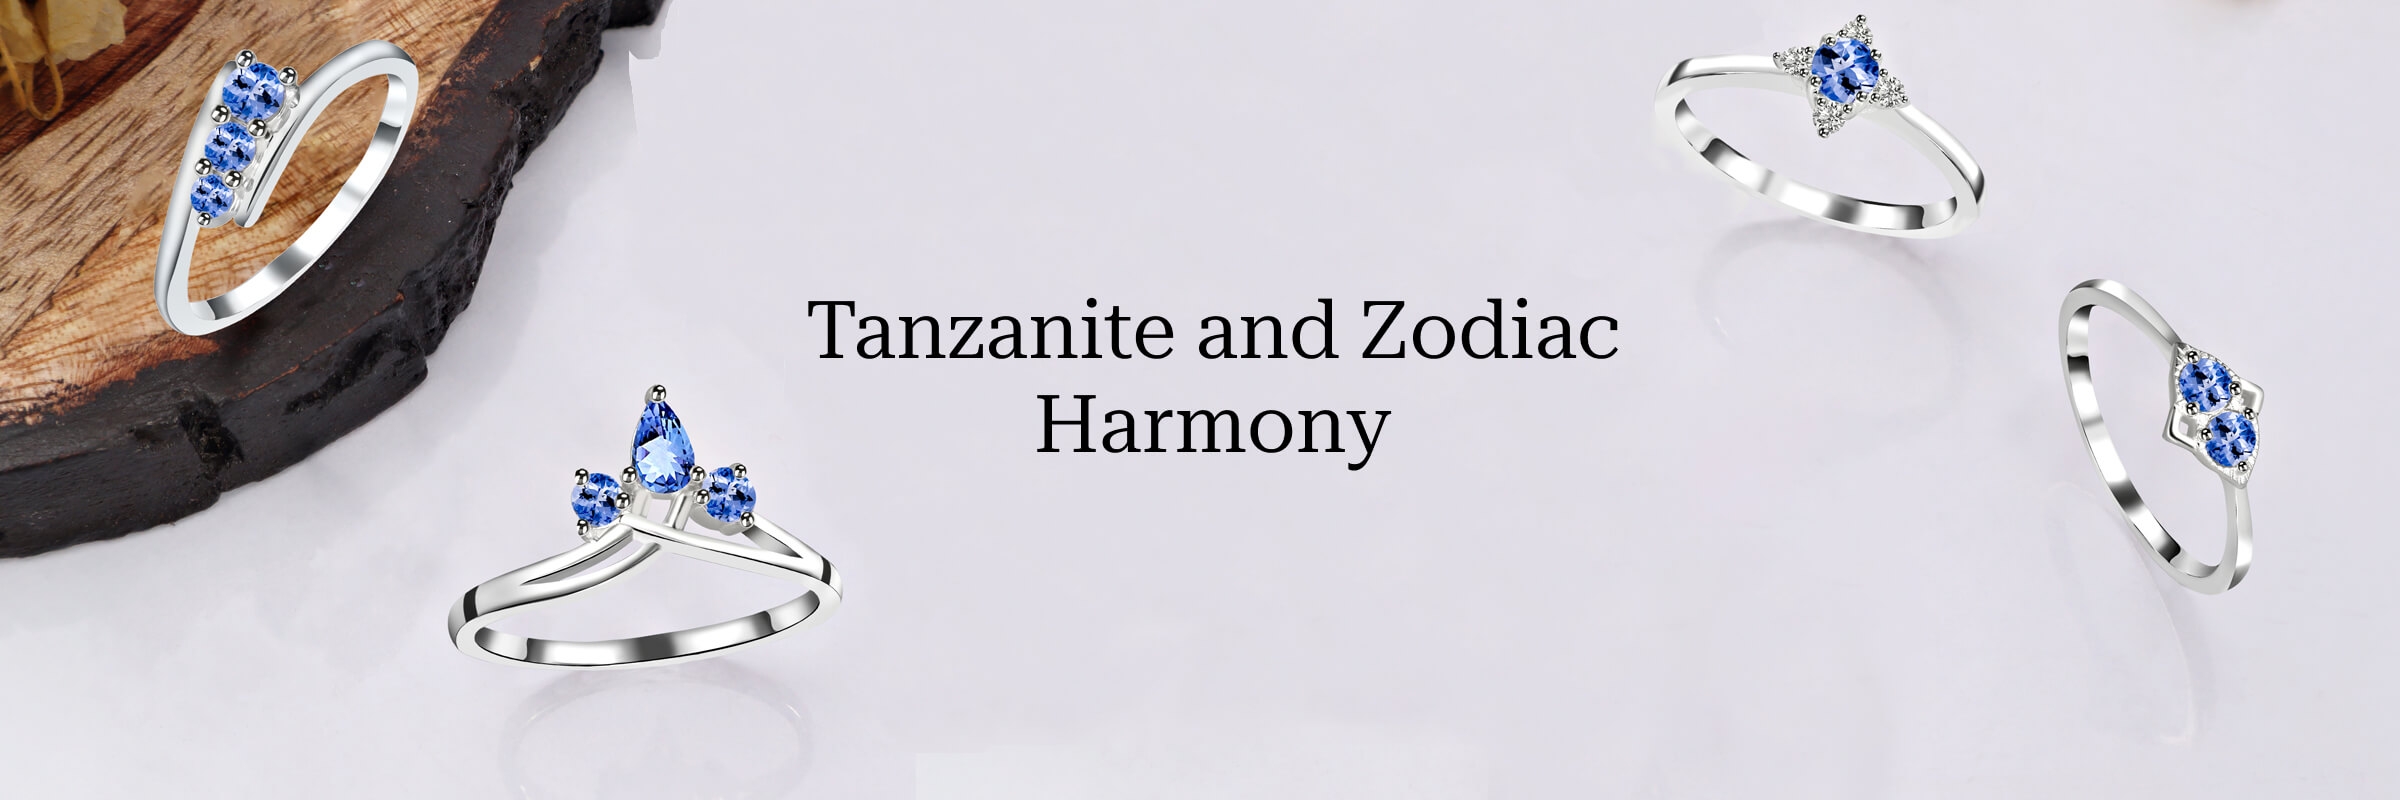 Zodiac associated with the Tanzanite